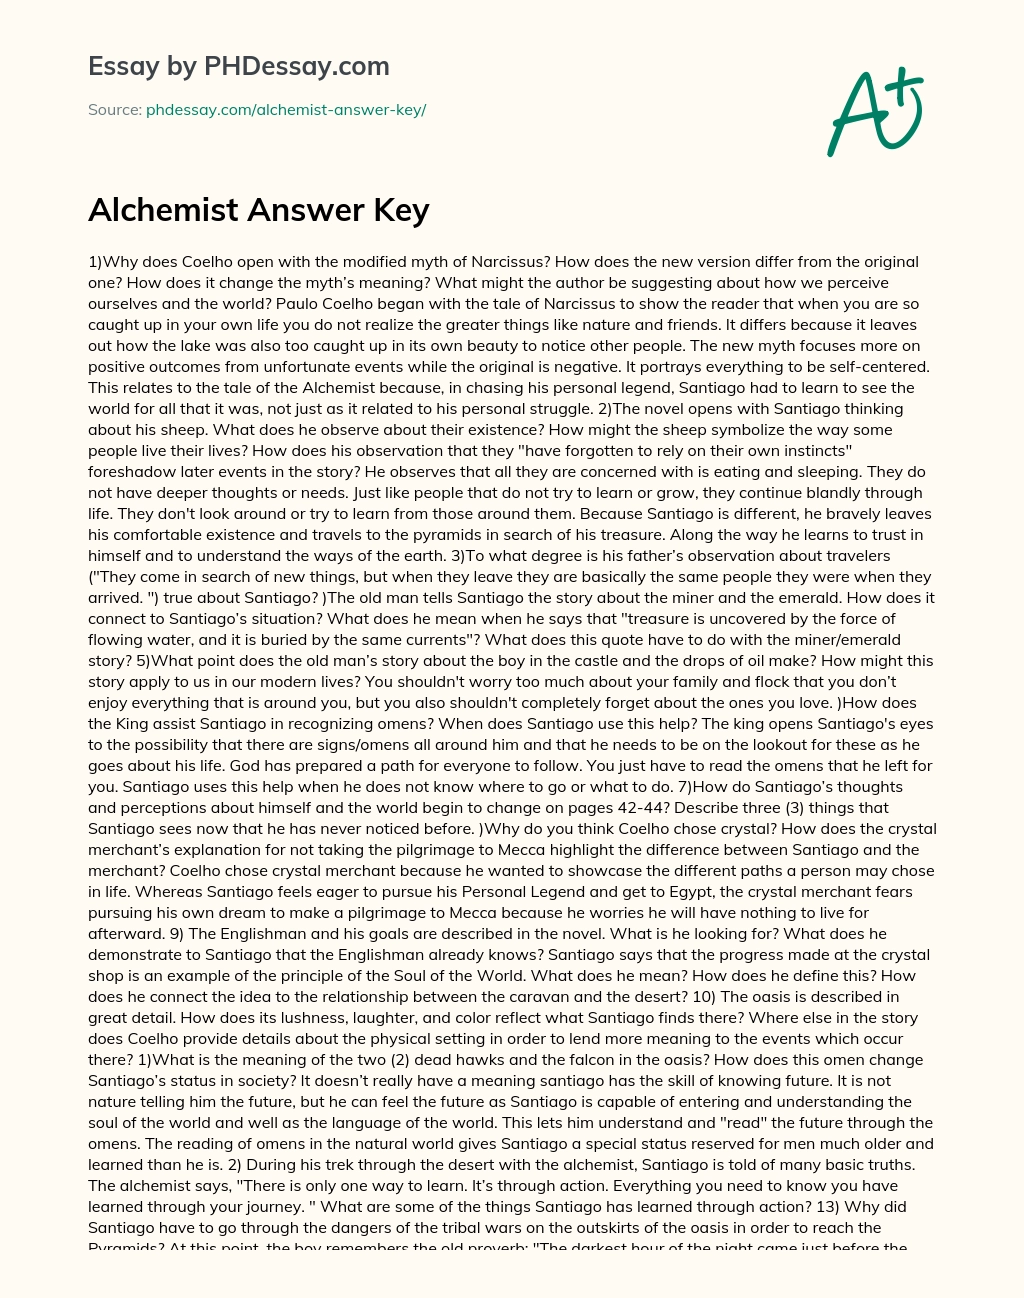 Alchemist Answer Key essay